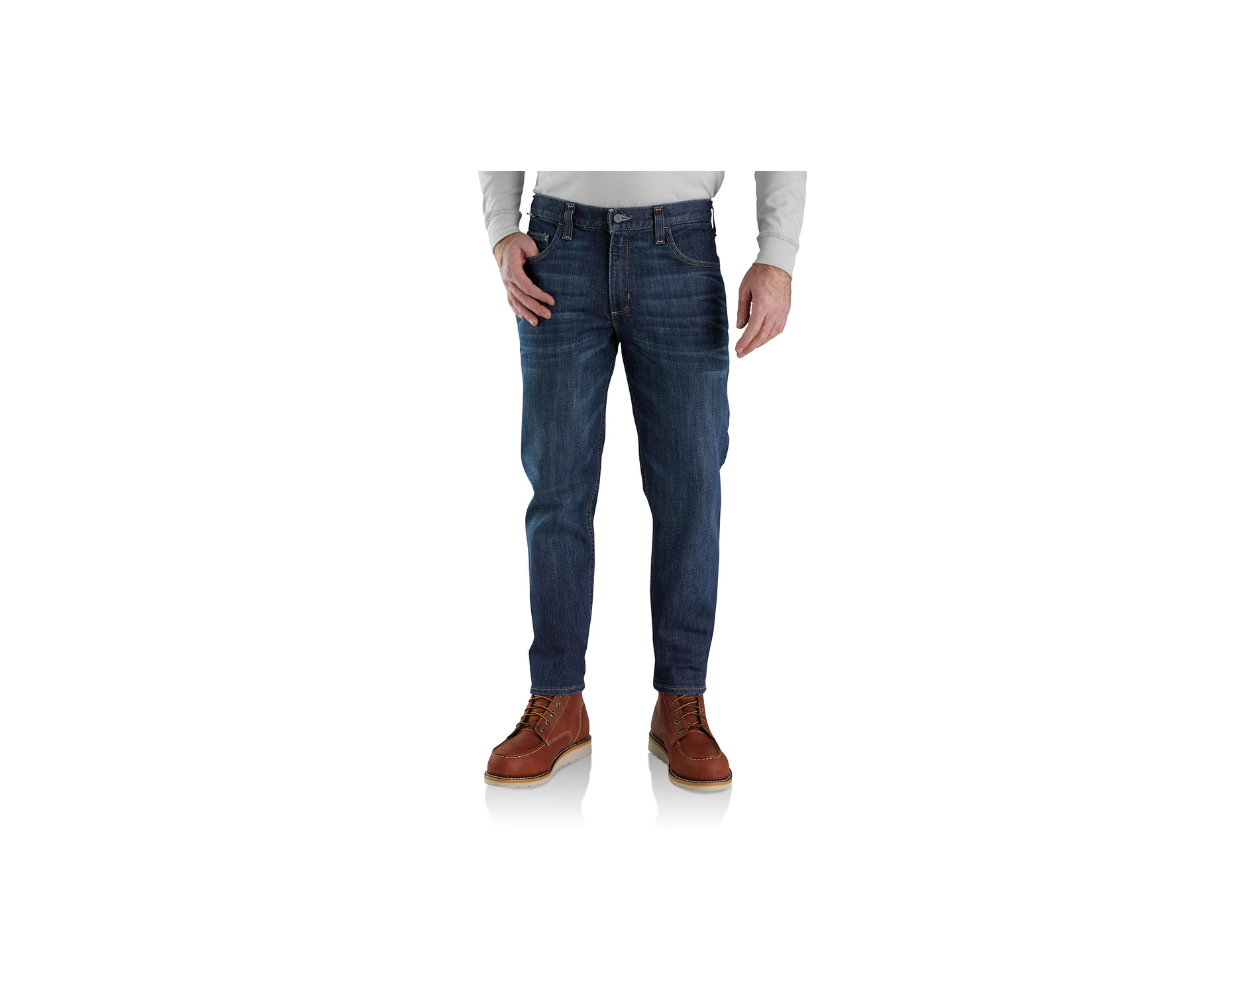 Carhartt Blue Denim Work Jeans Pants Men Size 40 x 30 Relaxed Fit